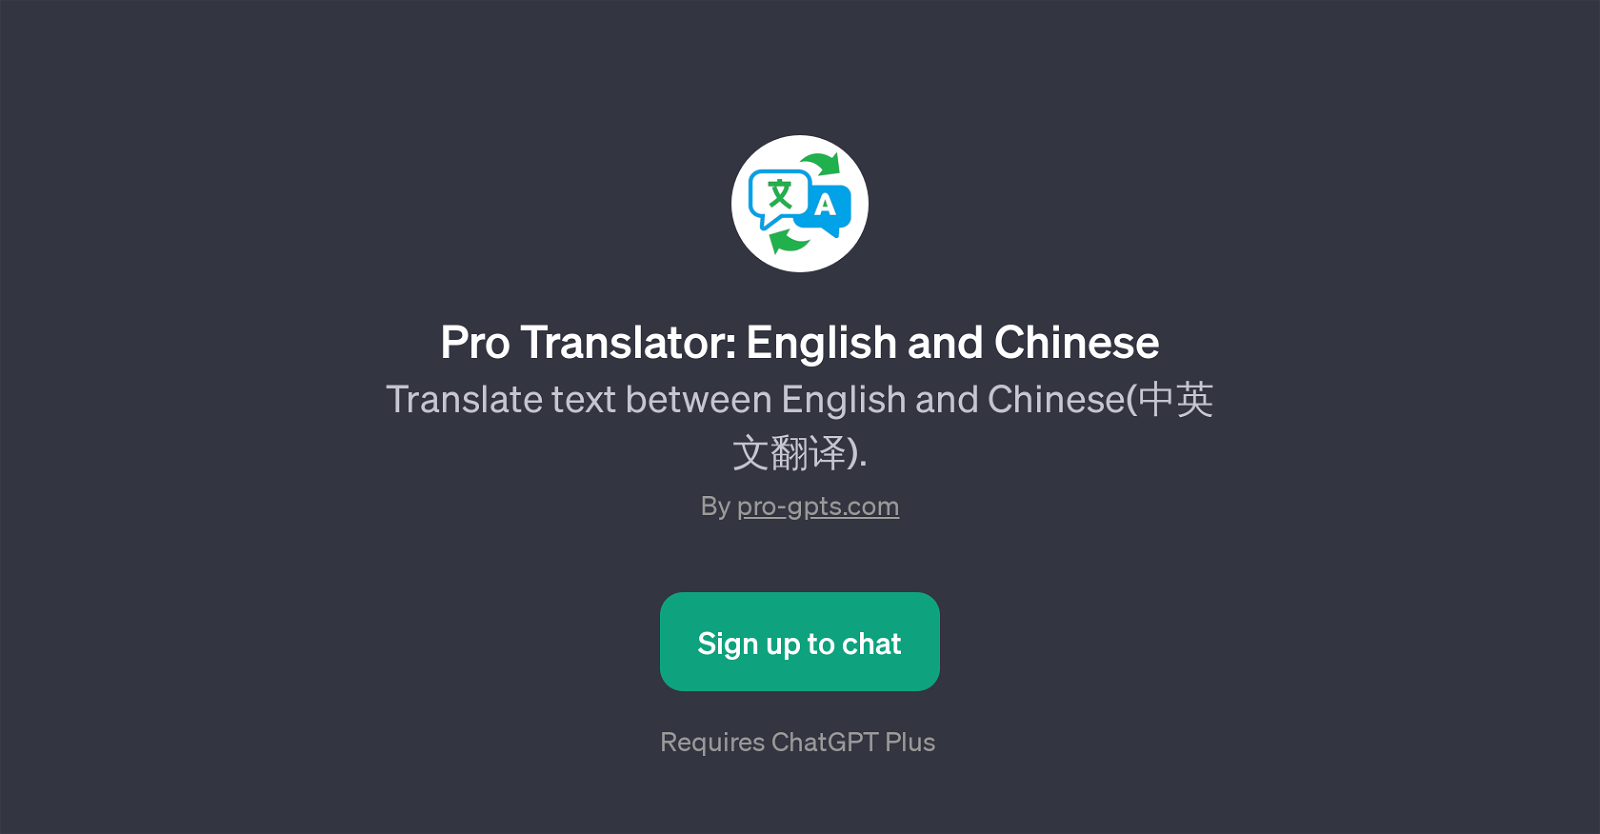 Pro Translator: English and Chinese website